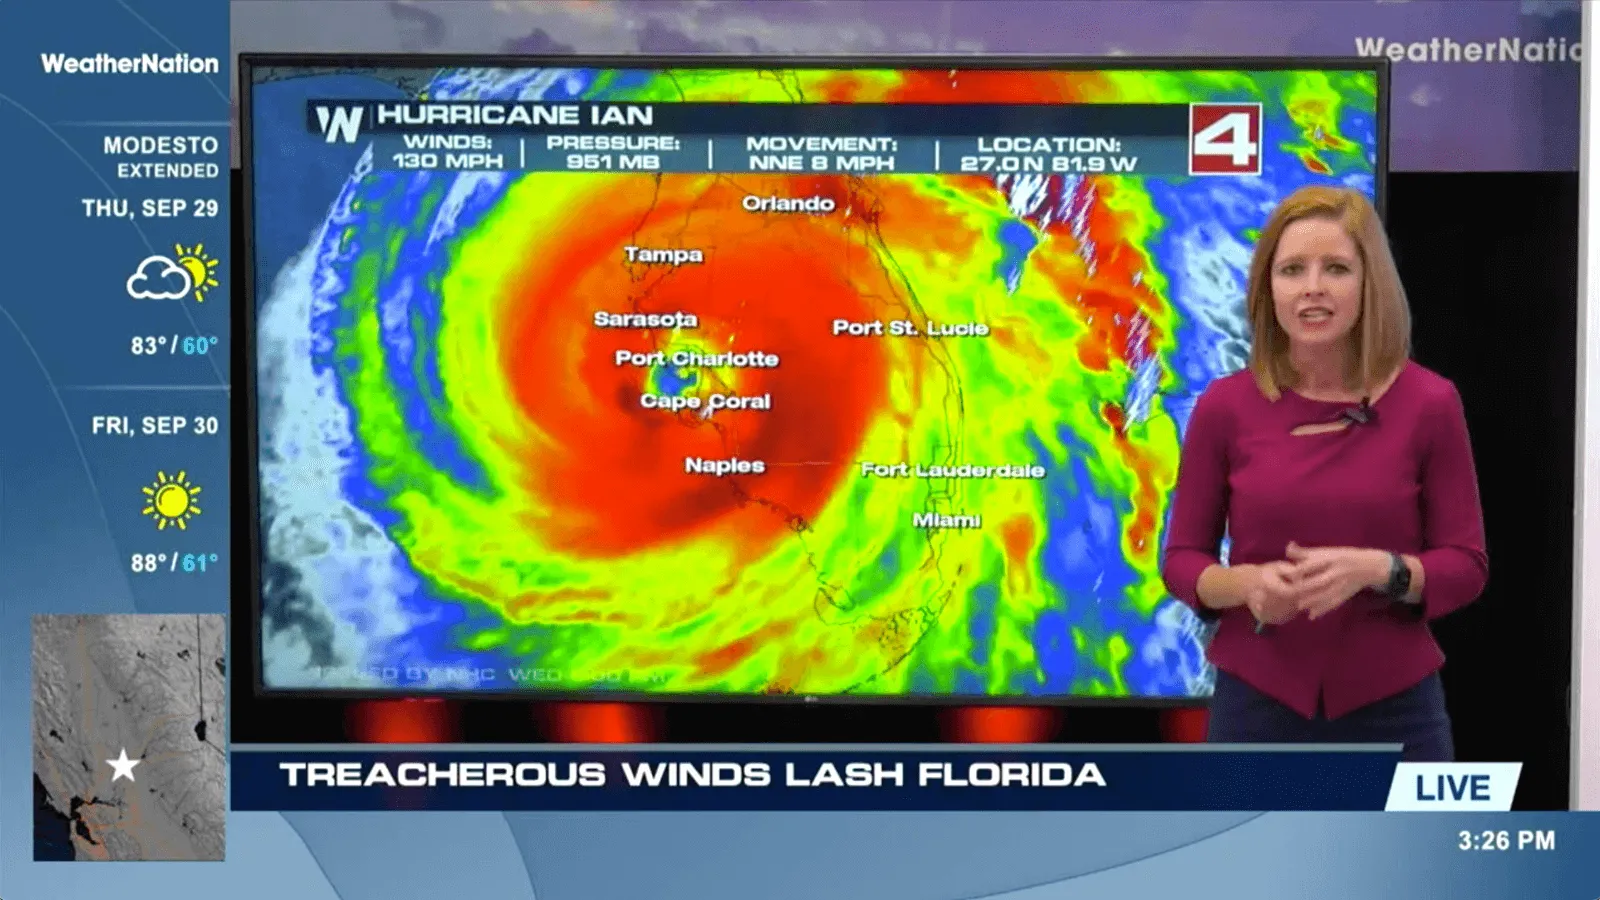 WeatherNation's coverage of Hurricane Ian.